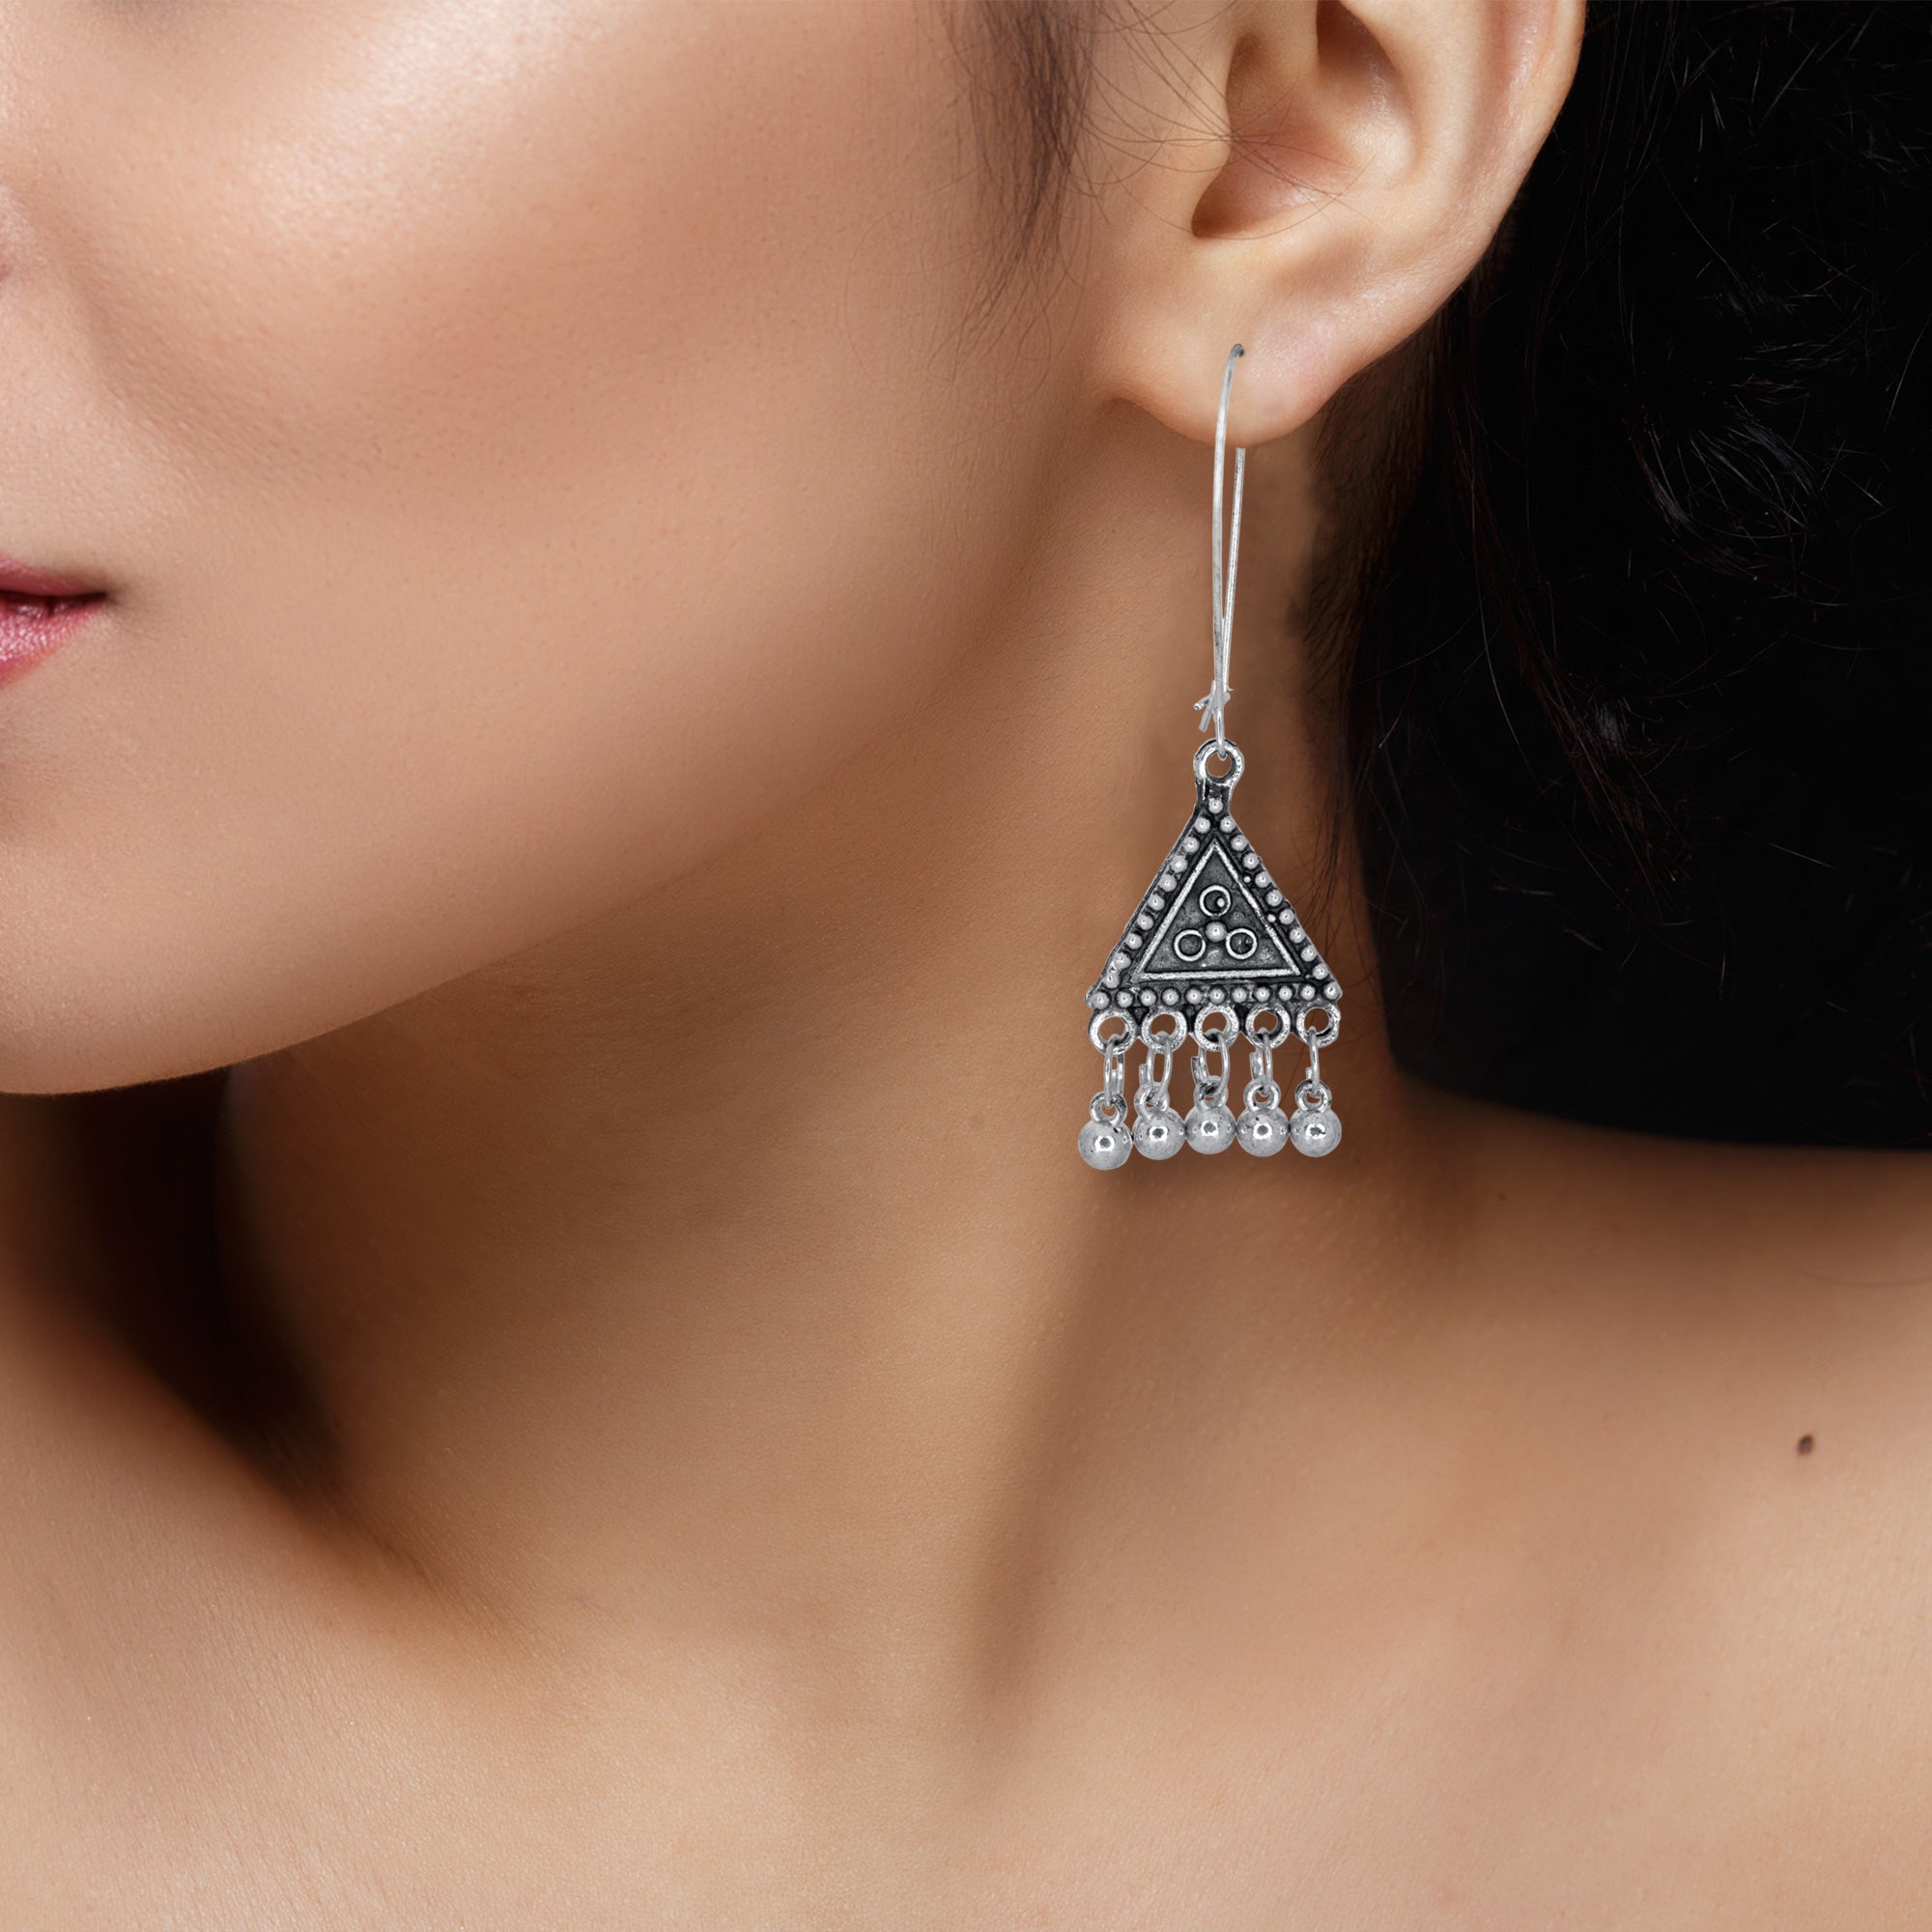 Abhinn Classy Silver Plated Geometrical Shape Hoops Earrings For Women